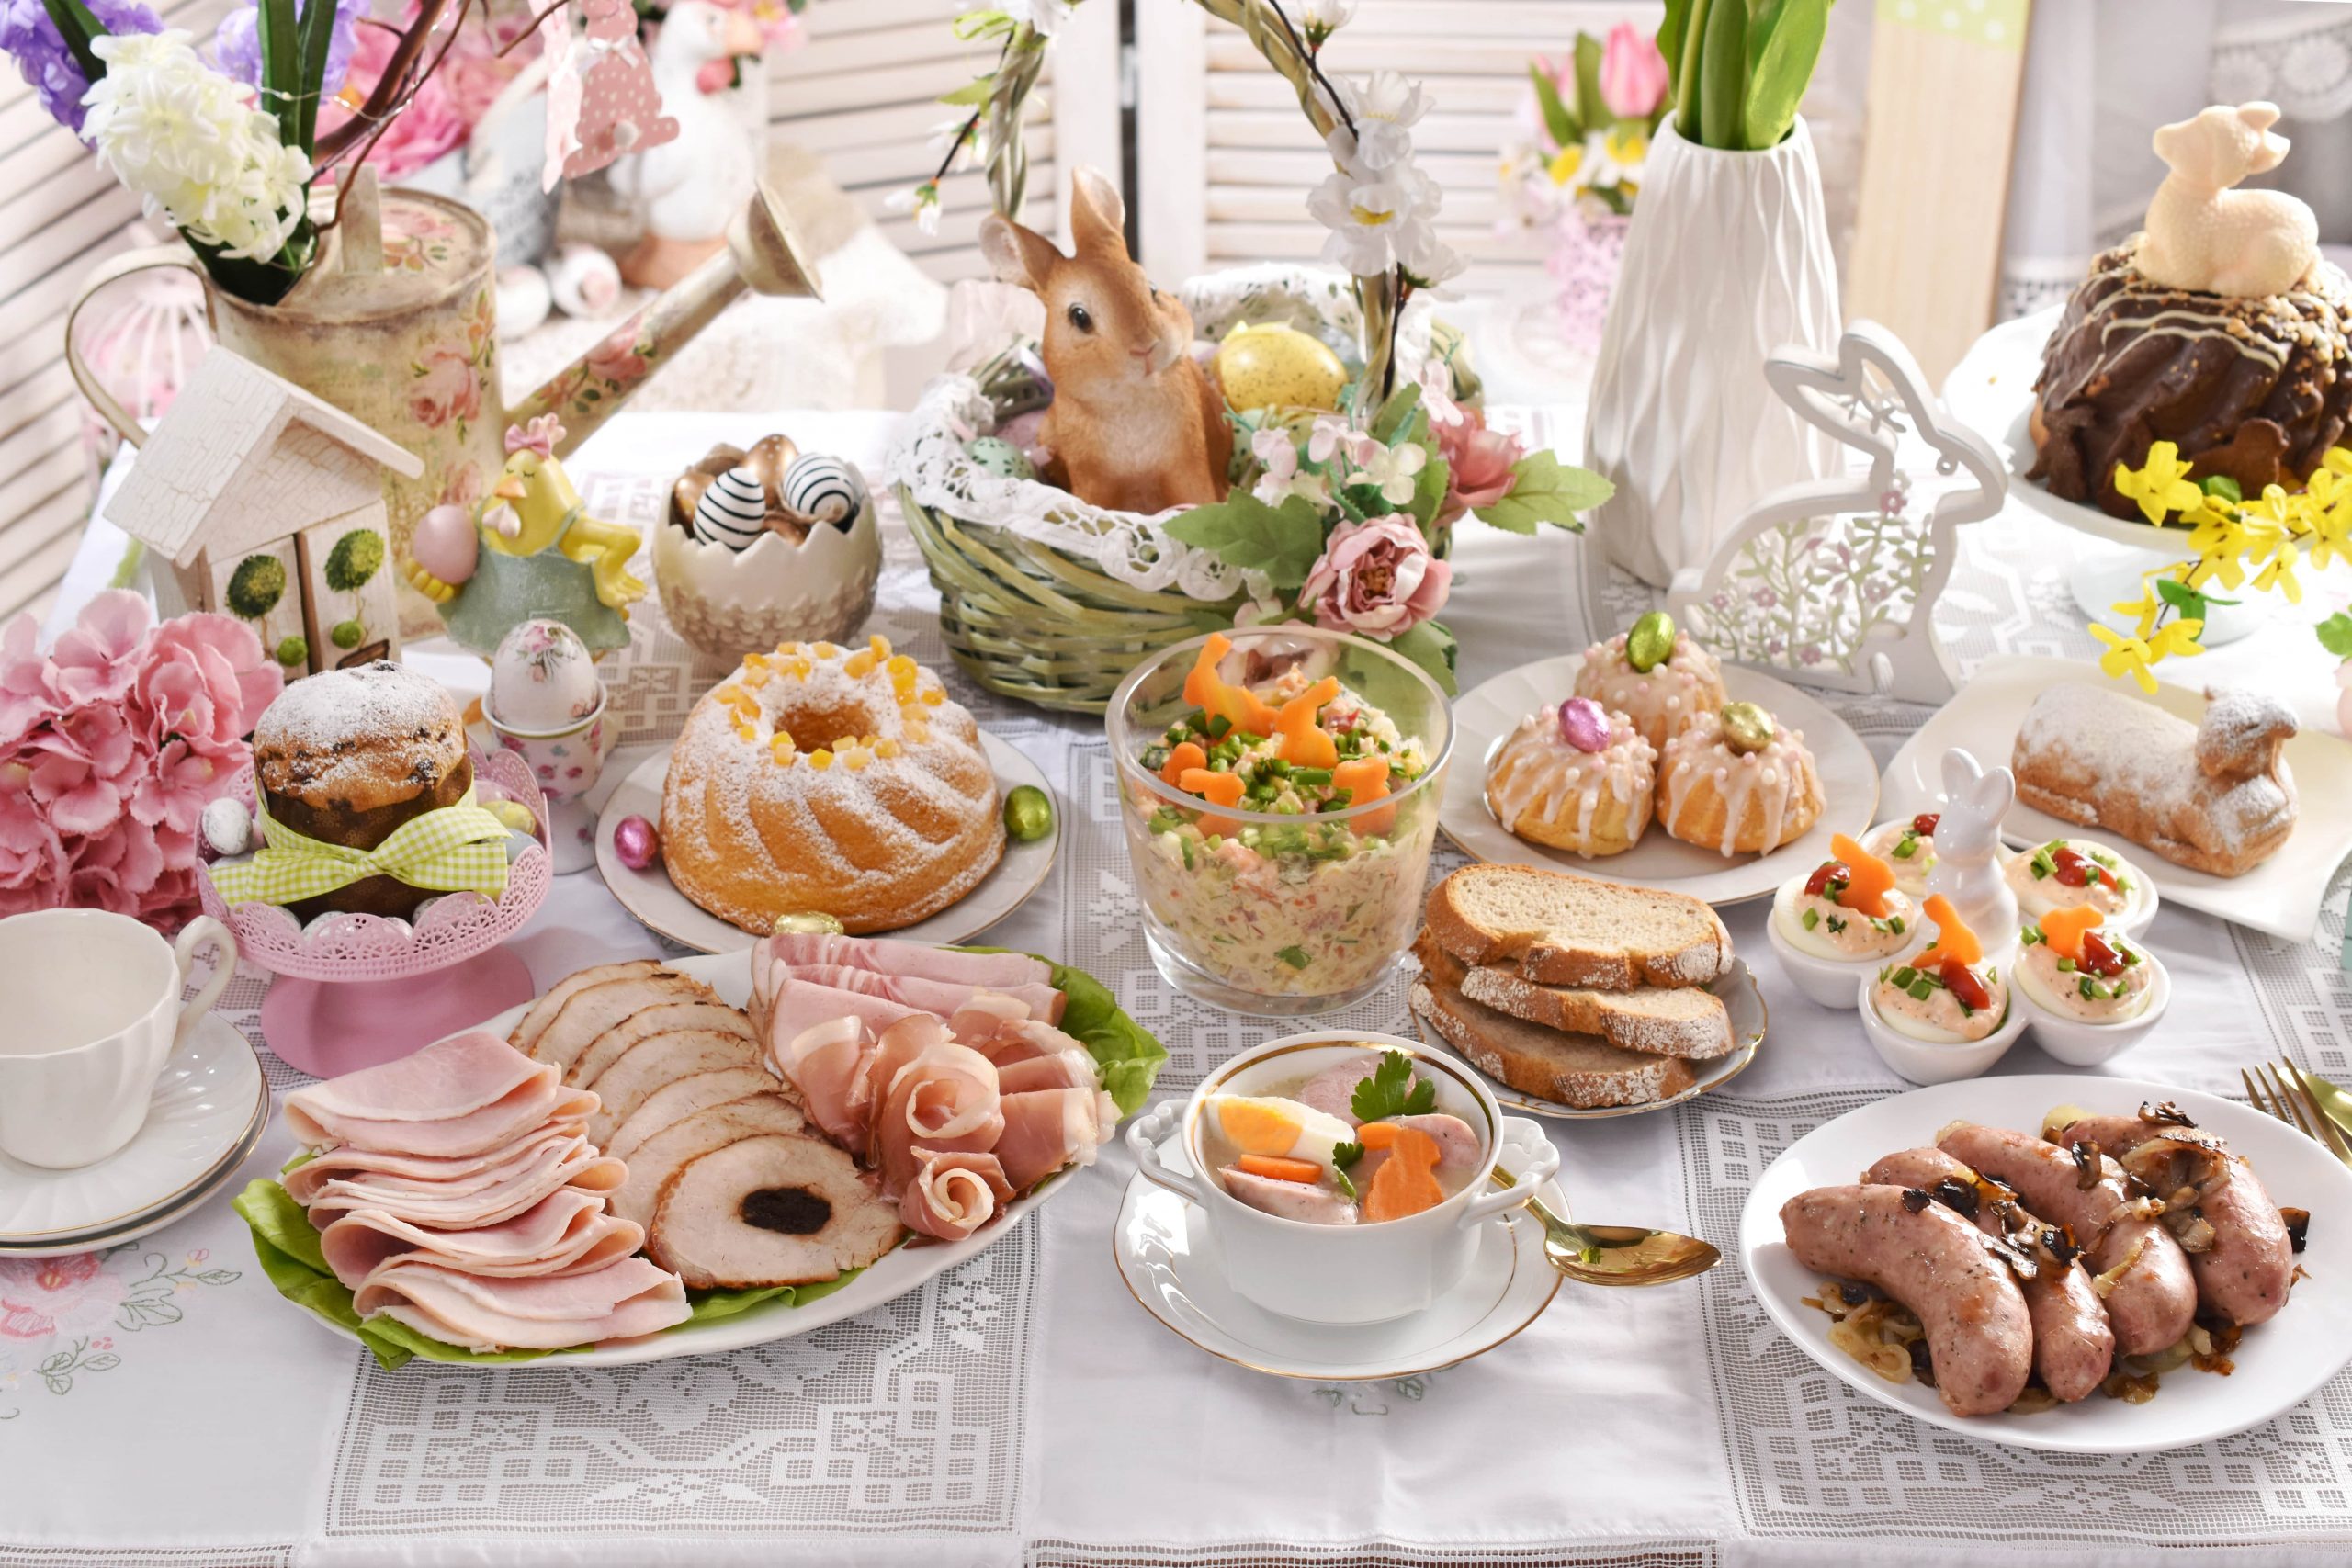 Wielkanoc, fot. Teresa Kasprzycka, Shutterstock